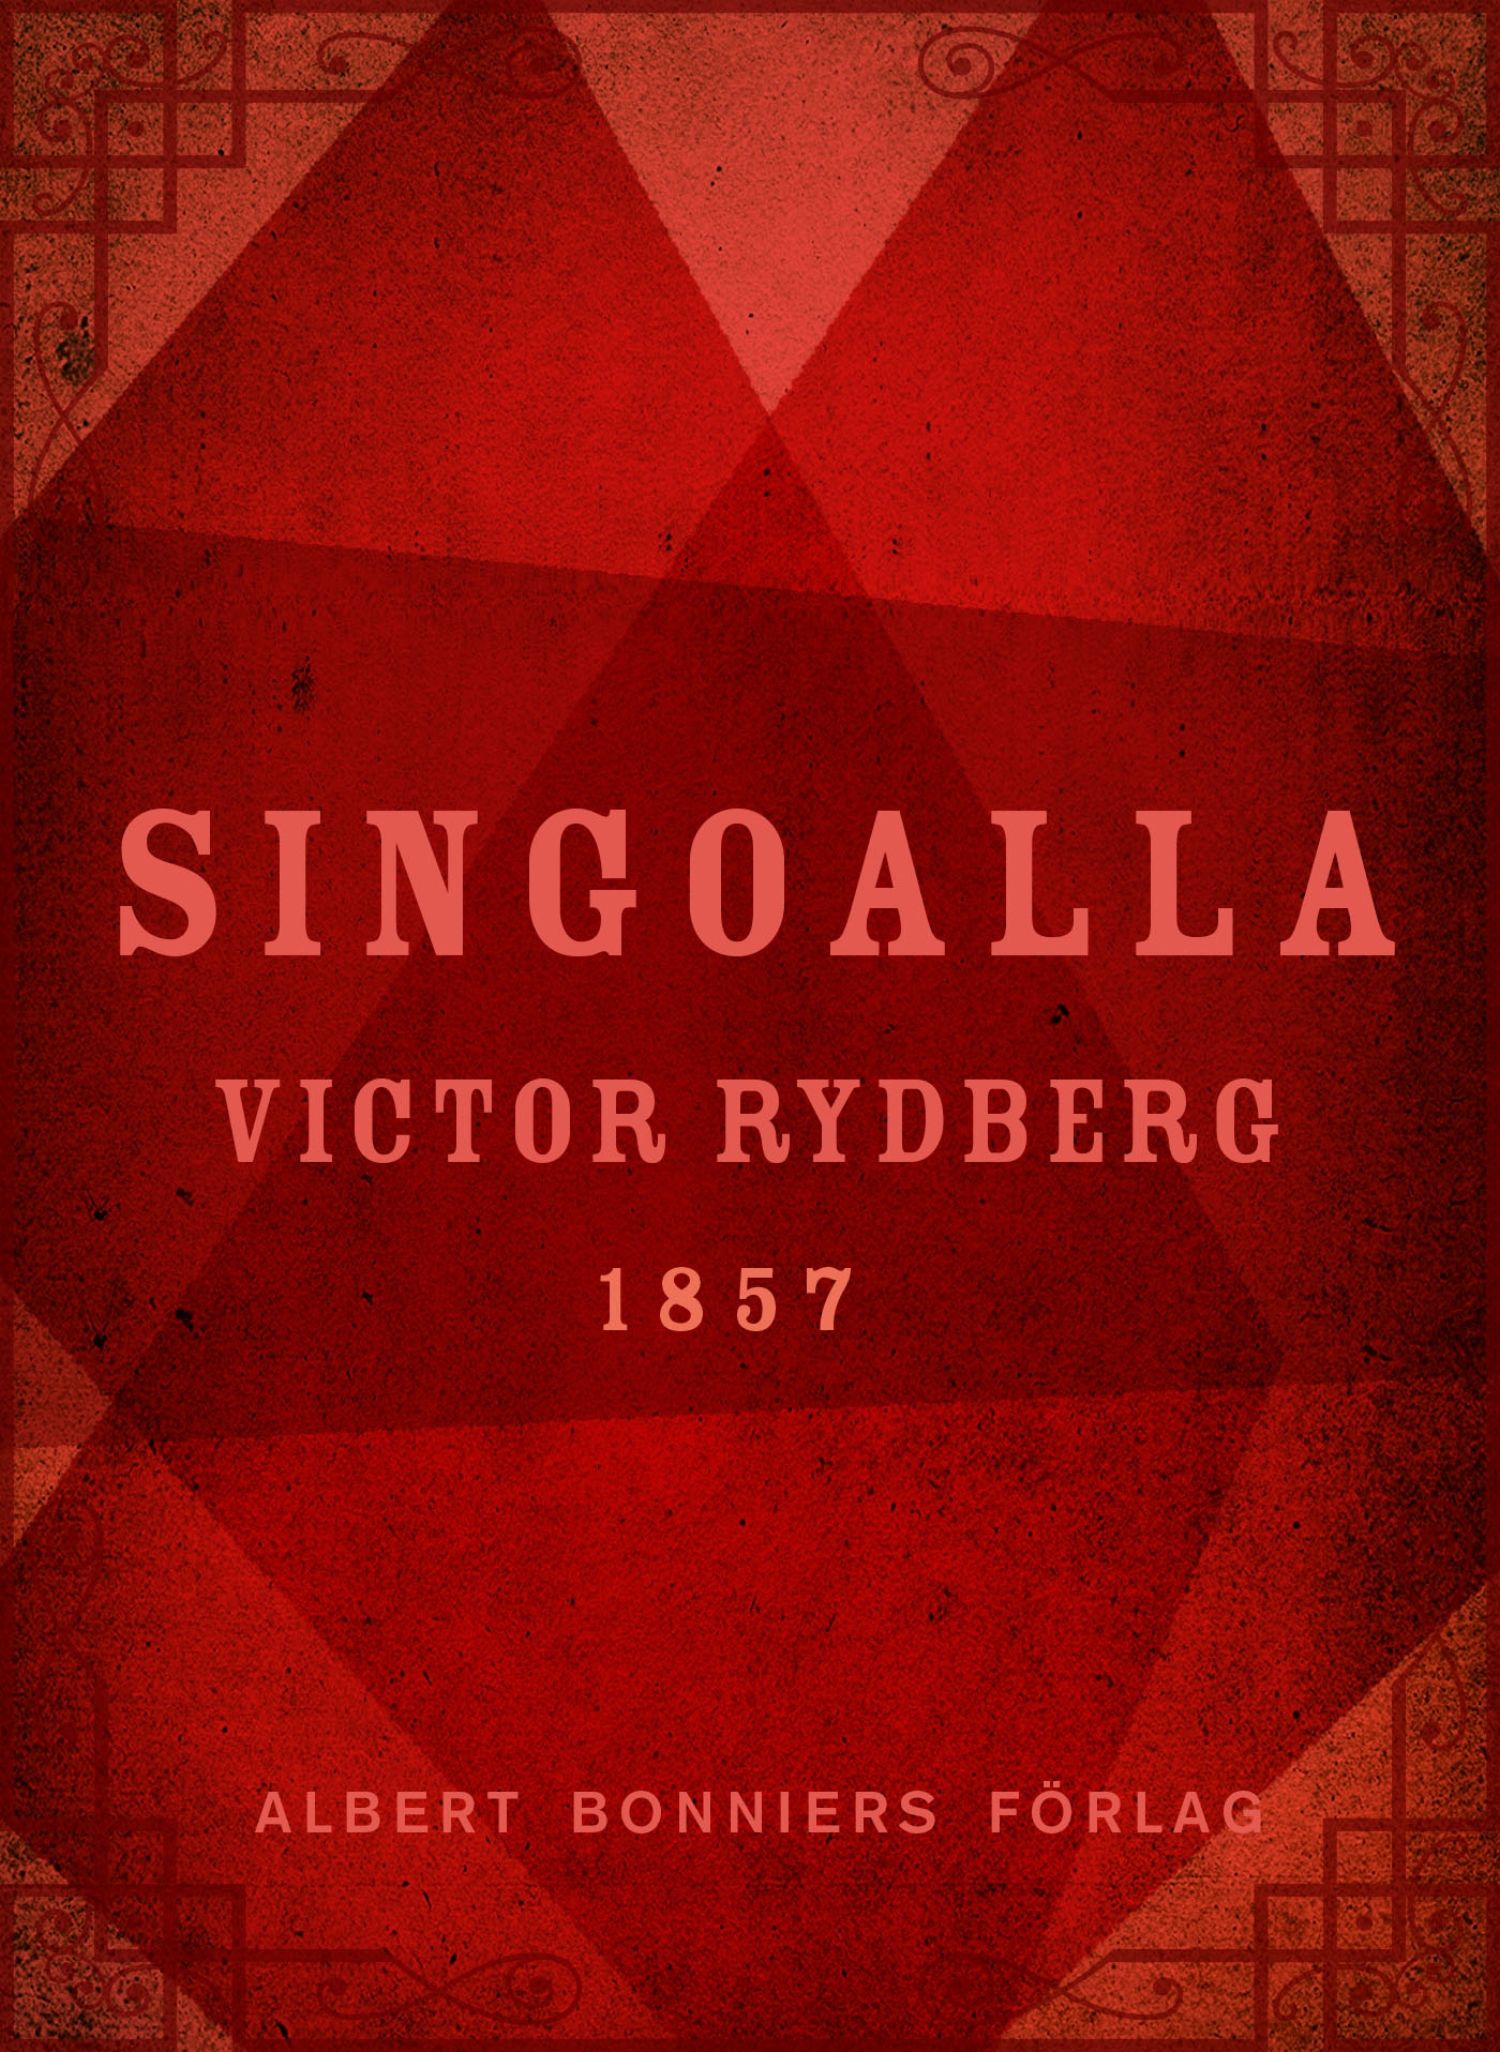 Singoalla, eBook by Viktor Rydberg